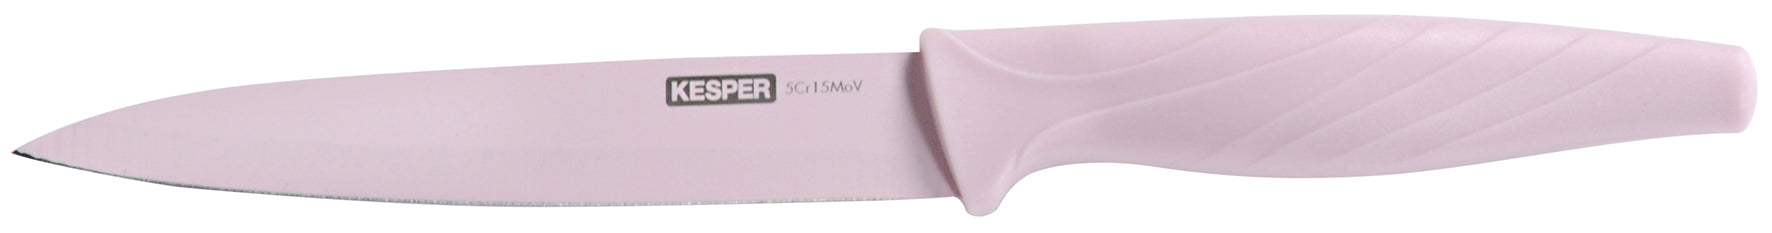 Universalmesser - Klinge 12 -5 cm - rosa